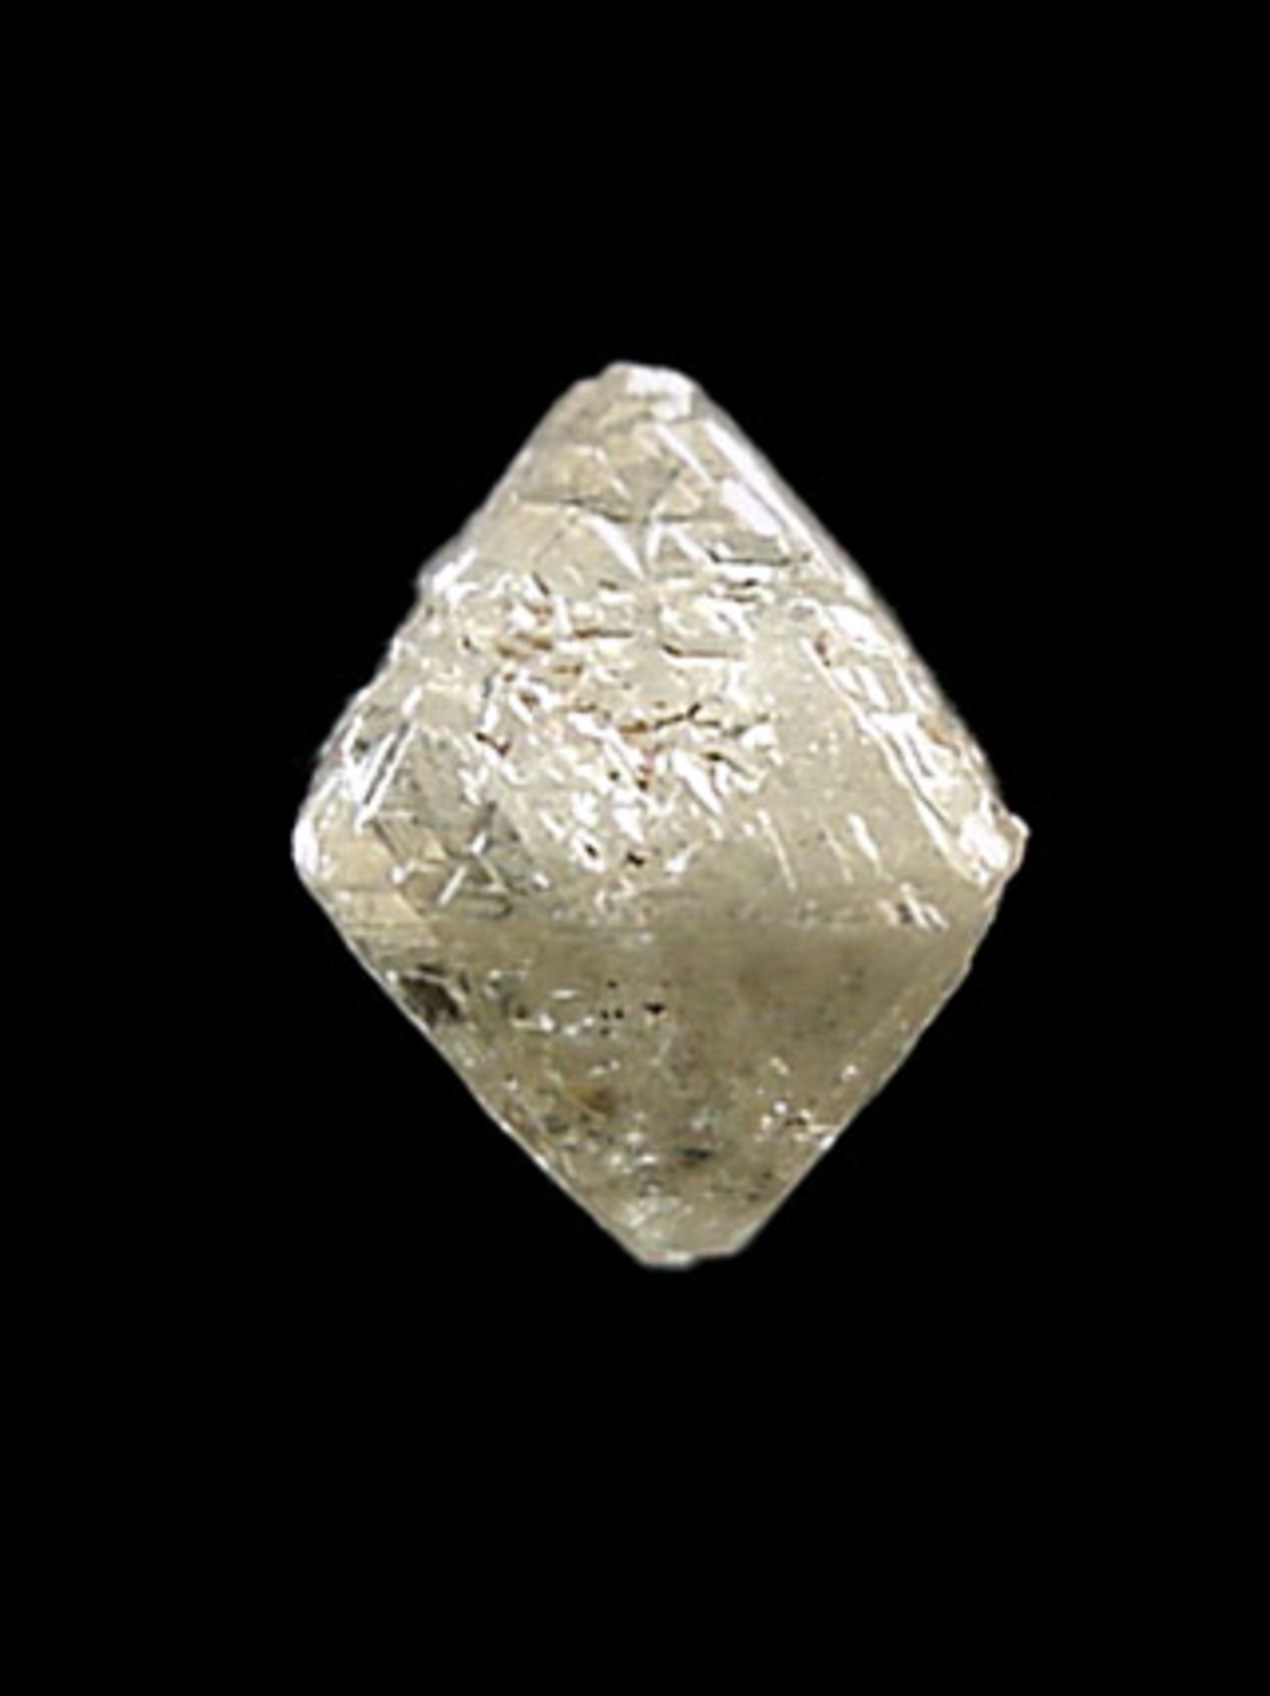 28 Piece Lot of Natural Raw Uncut Diamond 31.05 Cts Lot 5-7 MM Piece Undrilled Natural Raw Diamond Lot GC#8